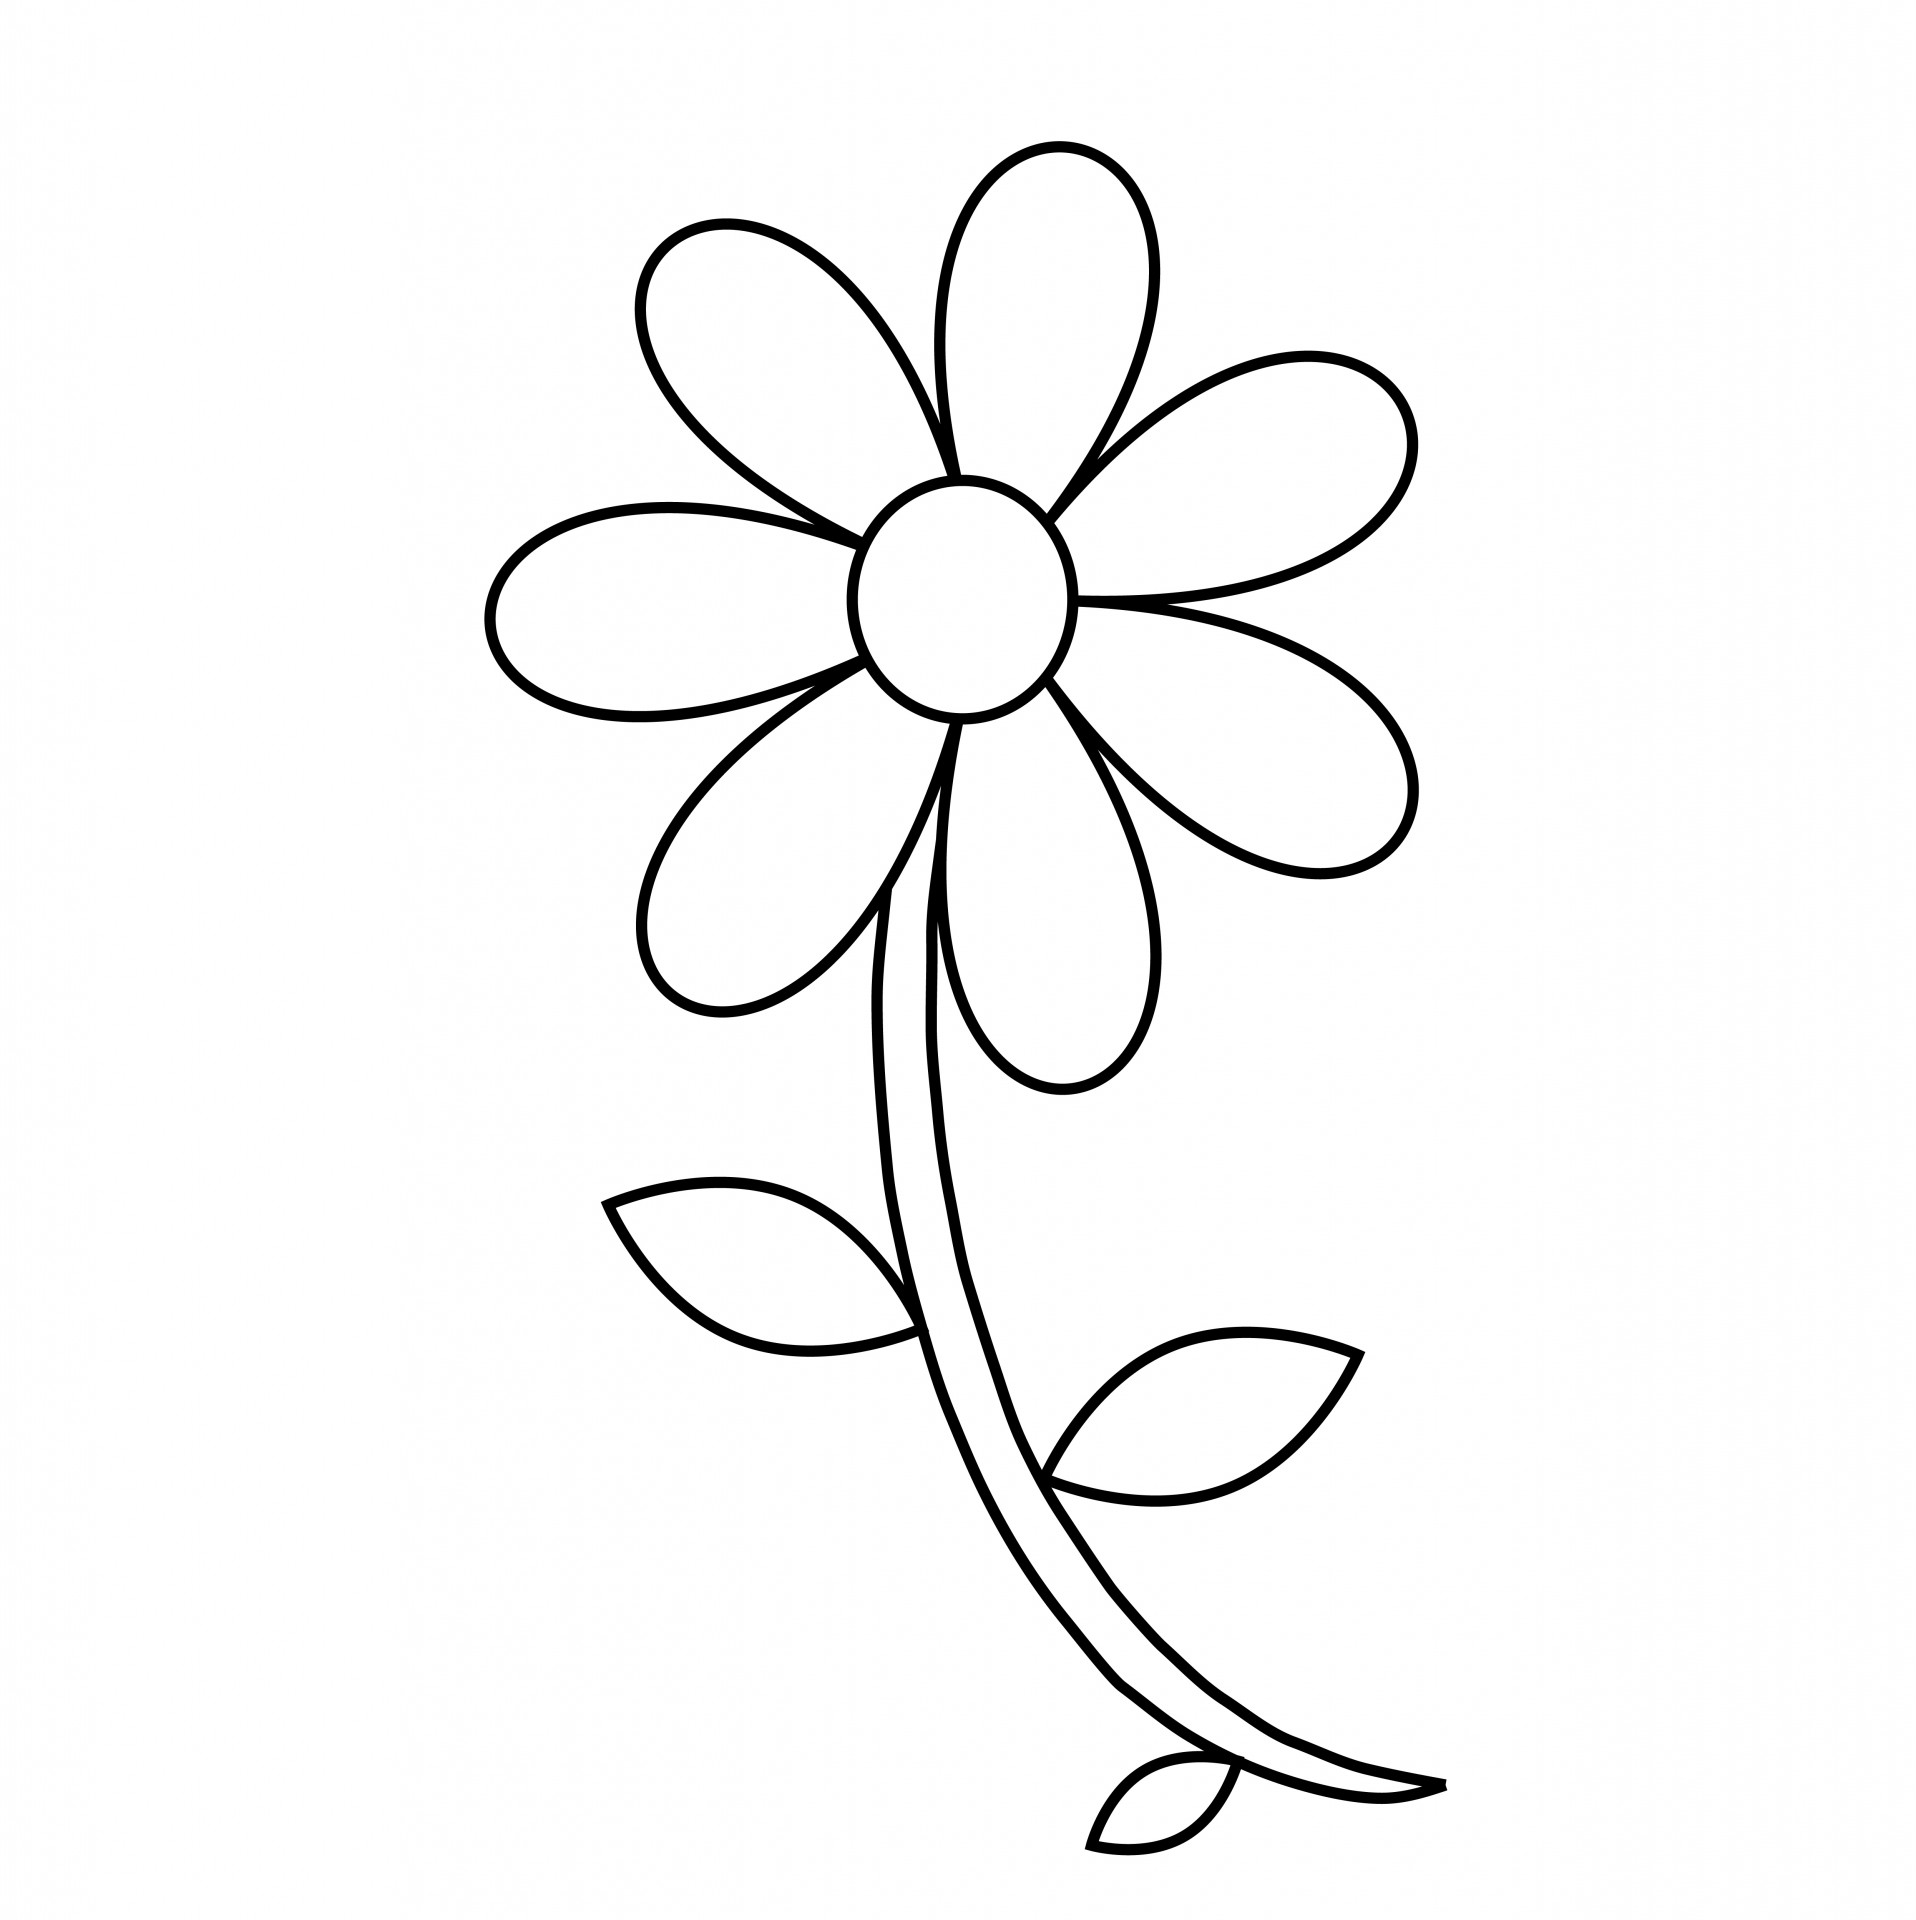 Flowers For > Flower Black And White Outline